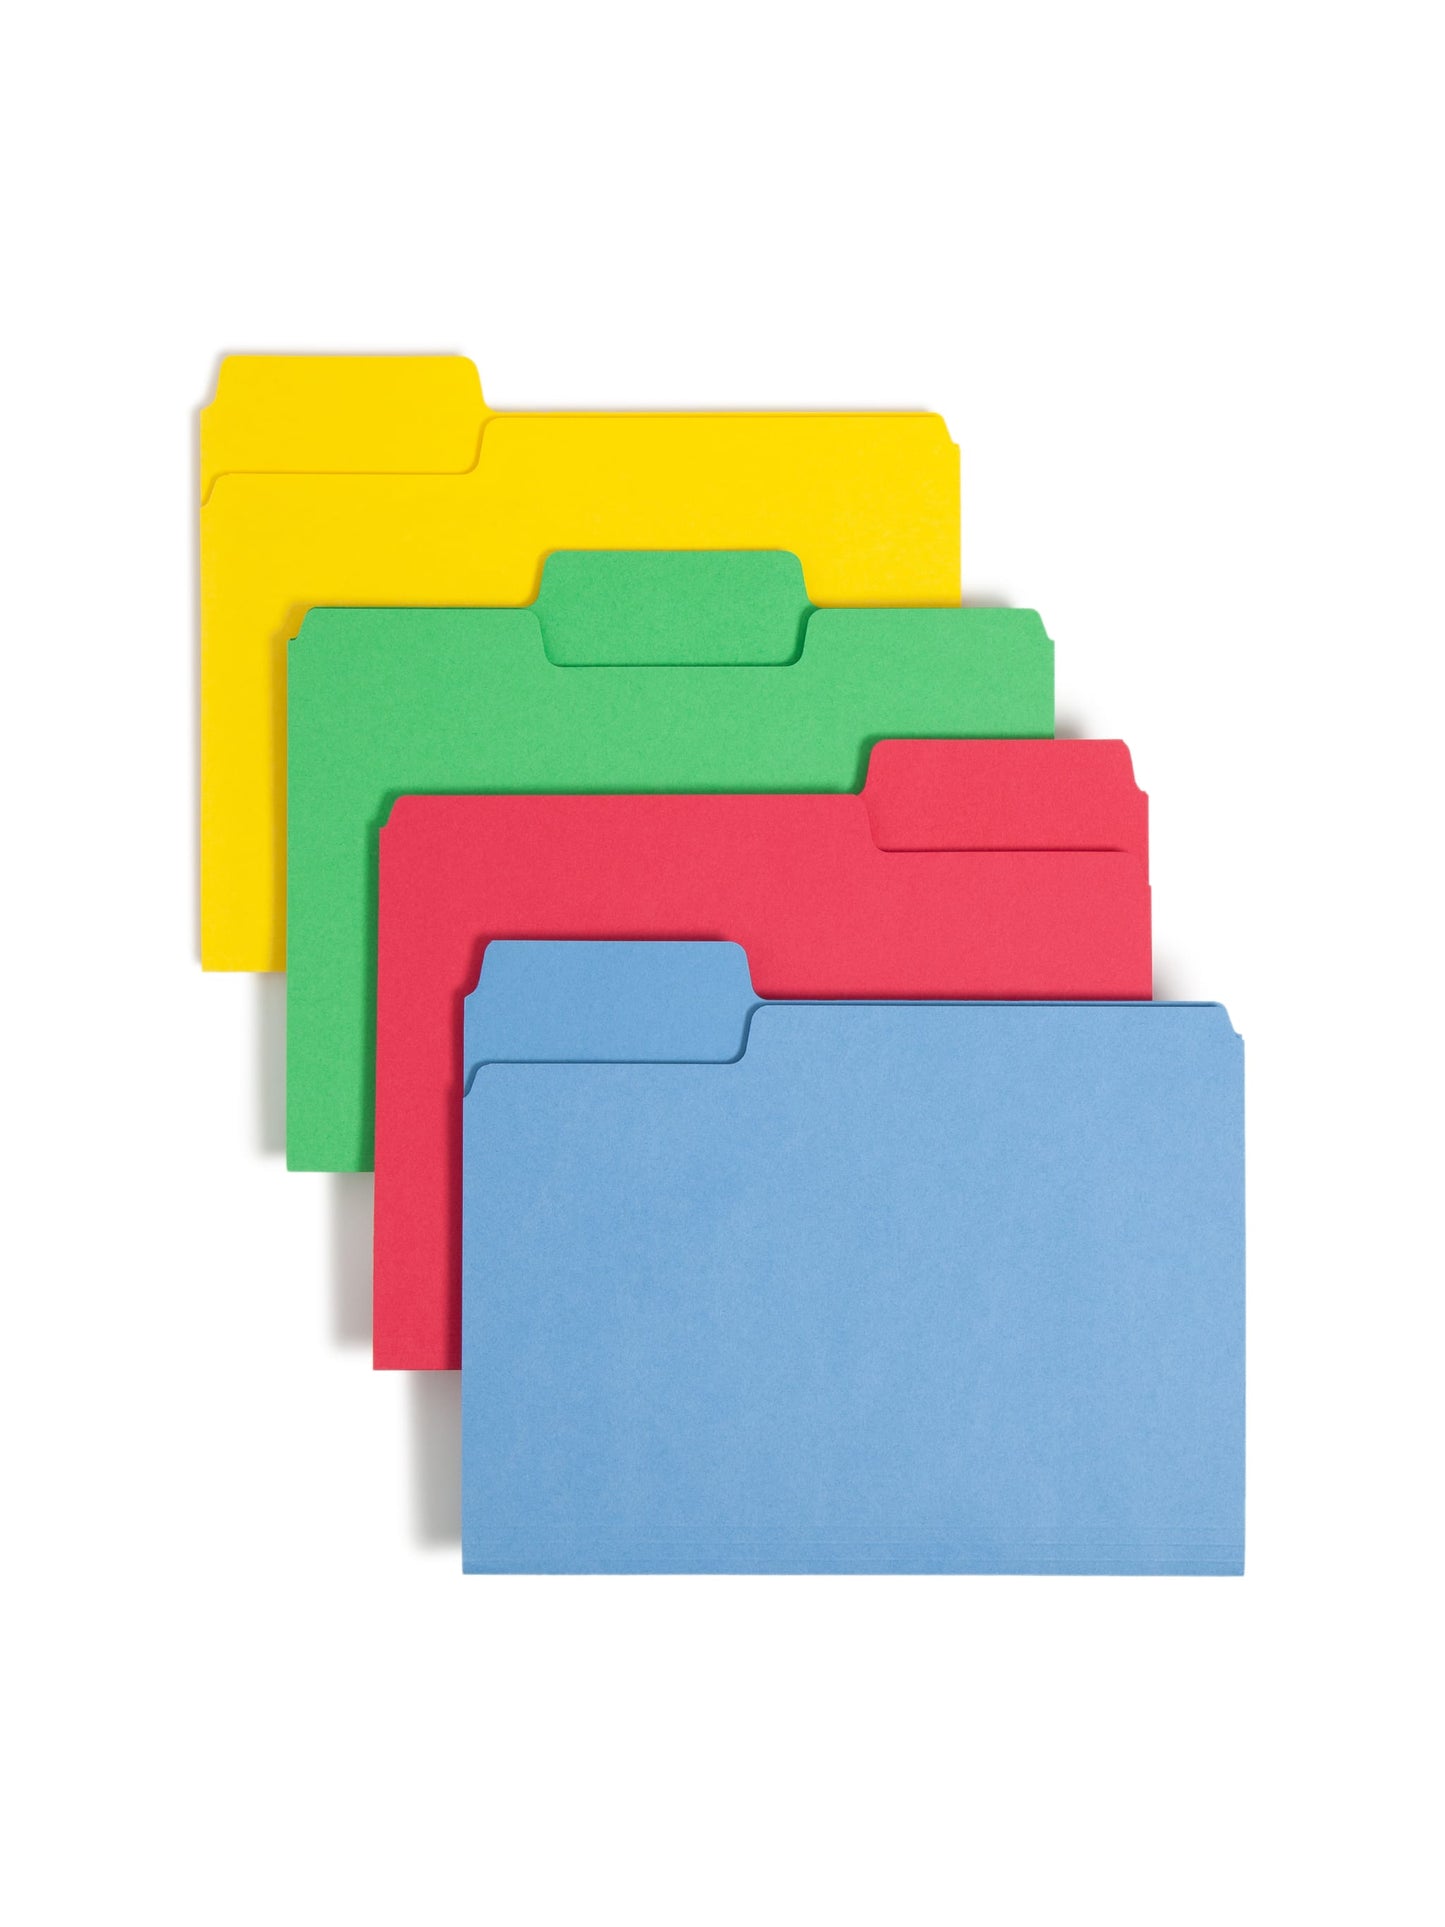 SuperTab® File Folders, 1/3-Cut Tab, Assorted Colors Color, Letter Size, Set of 1, 086486119566